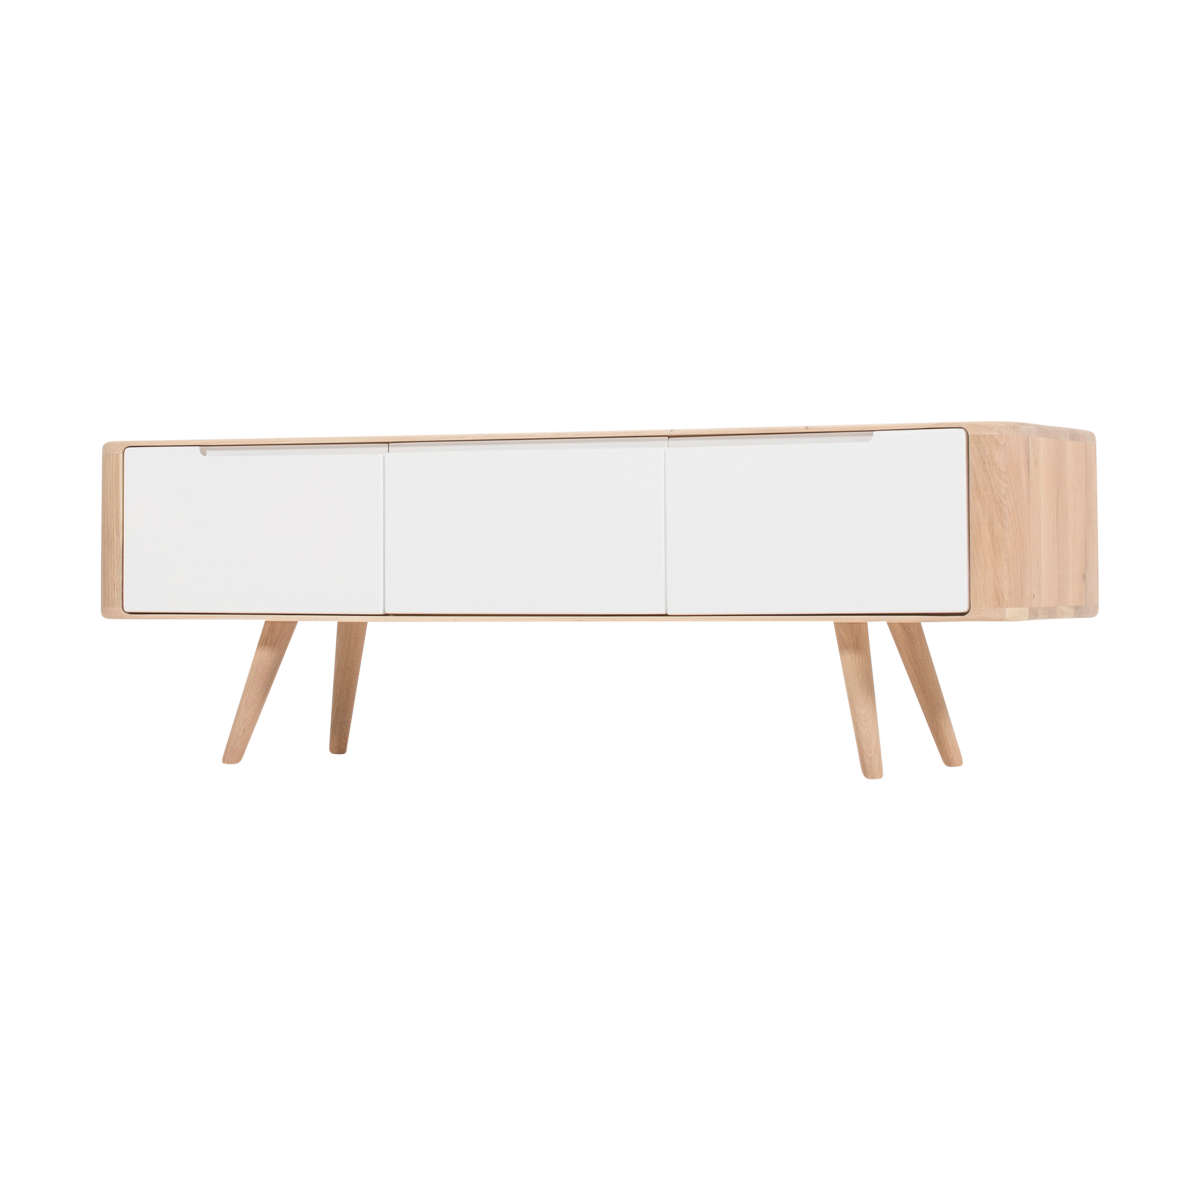 Ena lowboard houten tv meubel whitewash - 135 x 42 cm